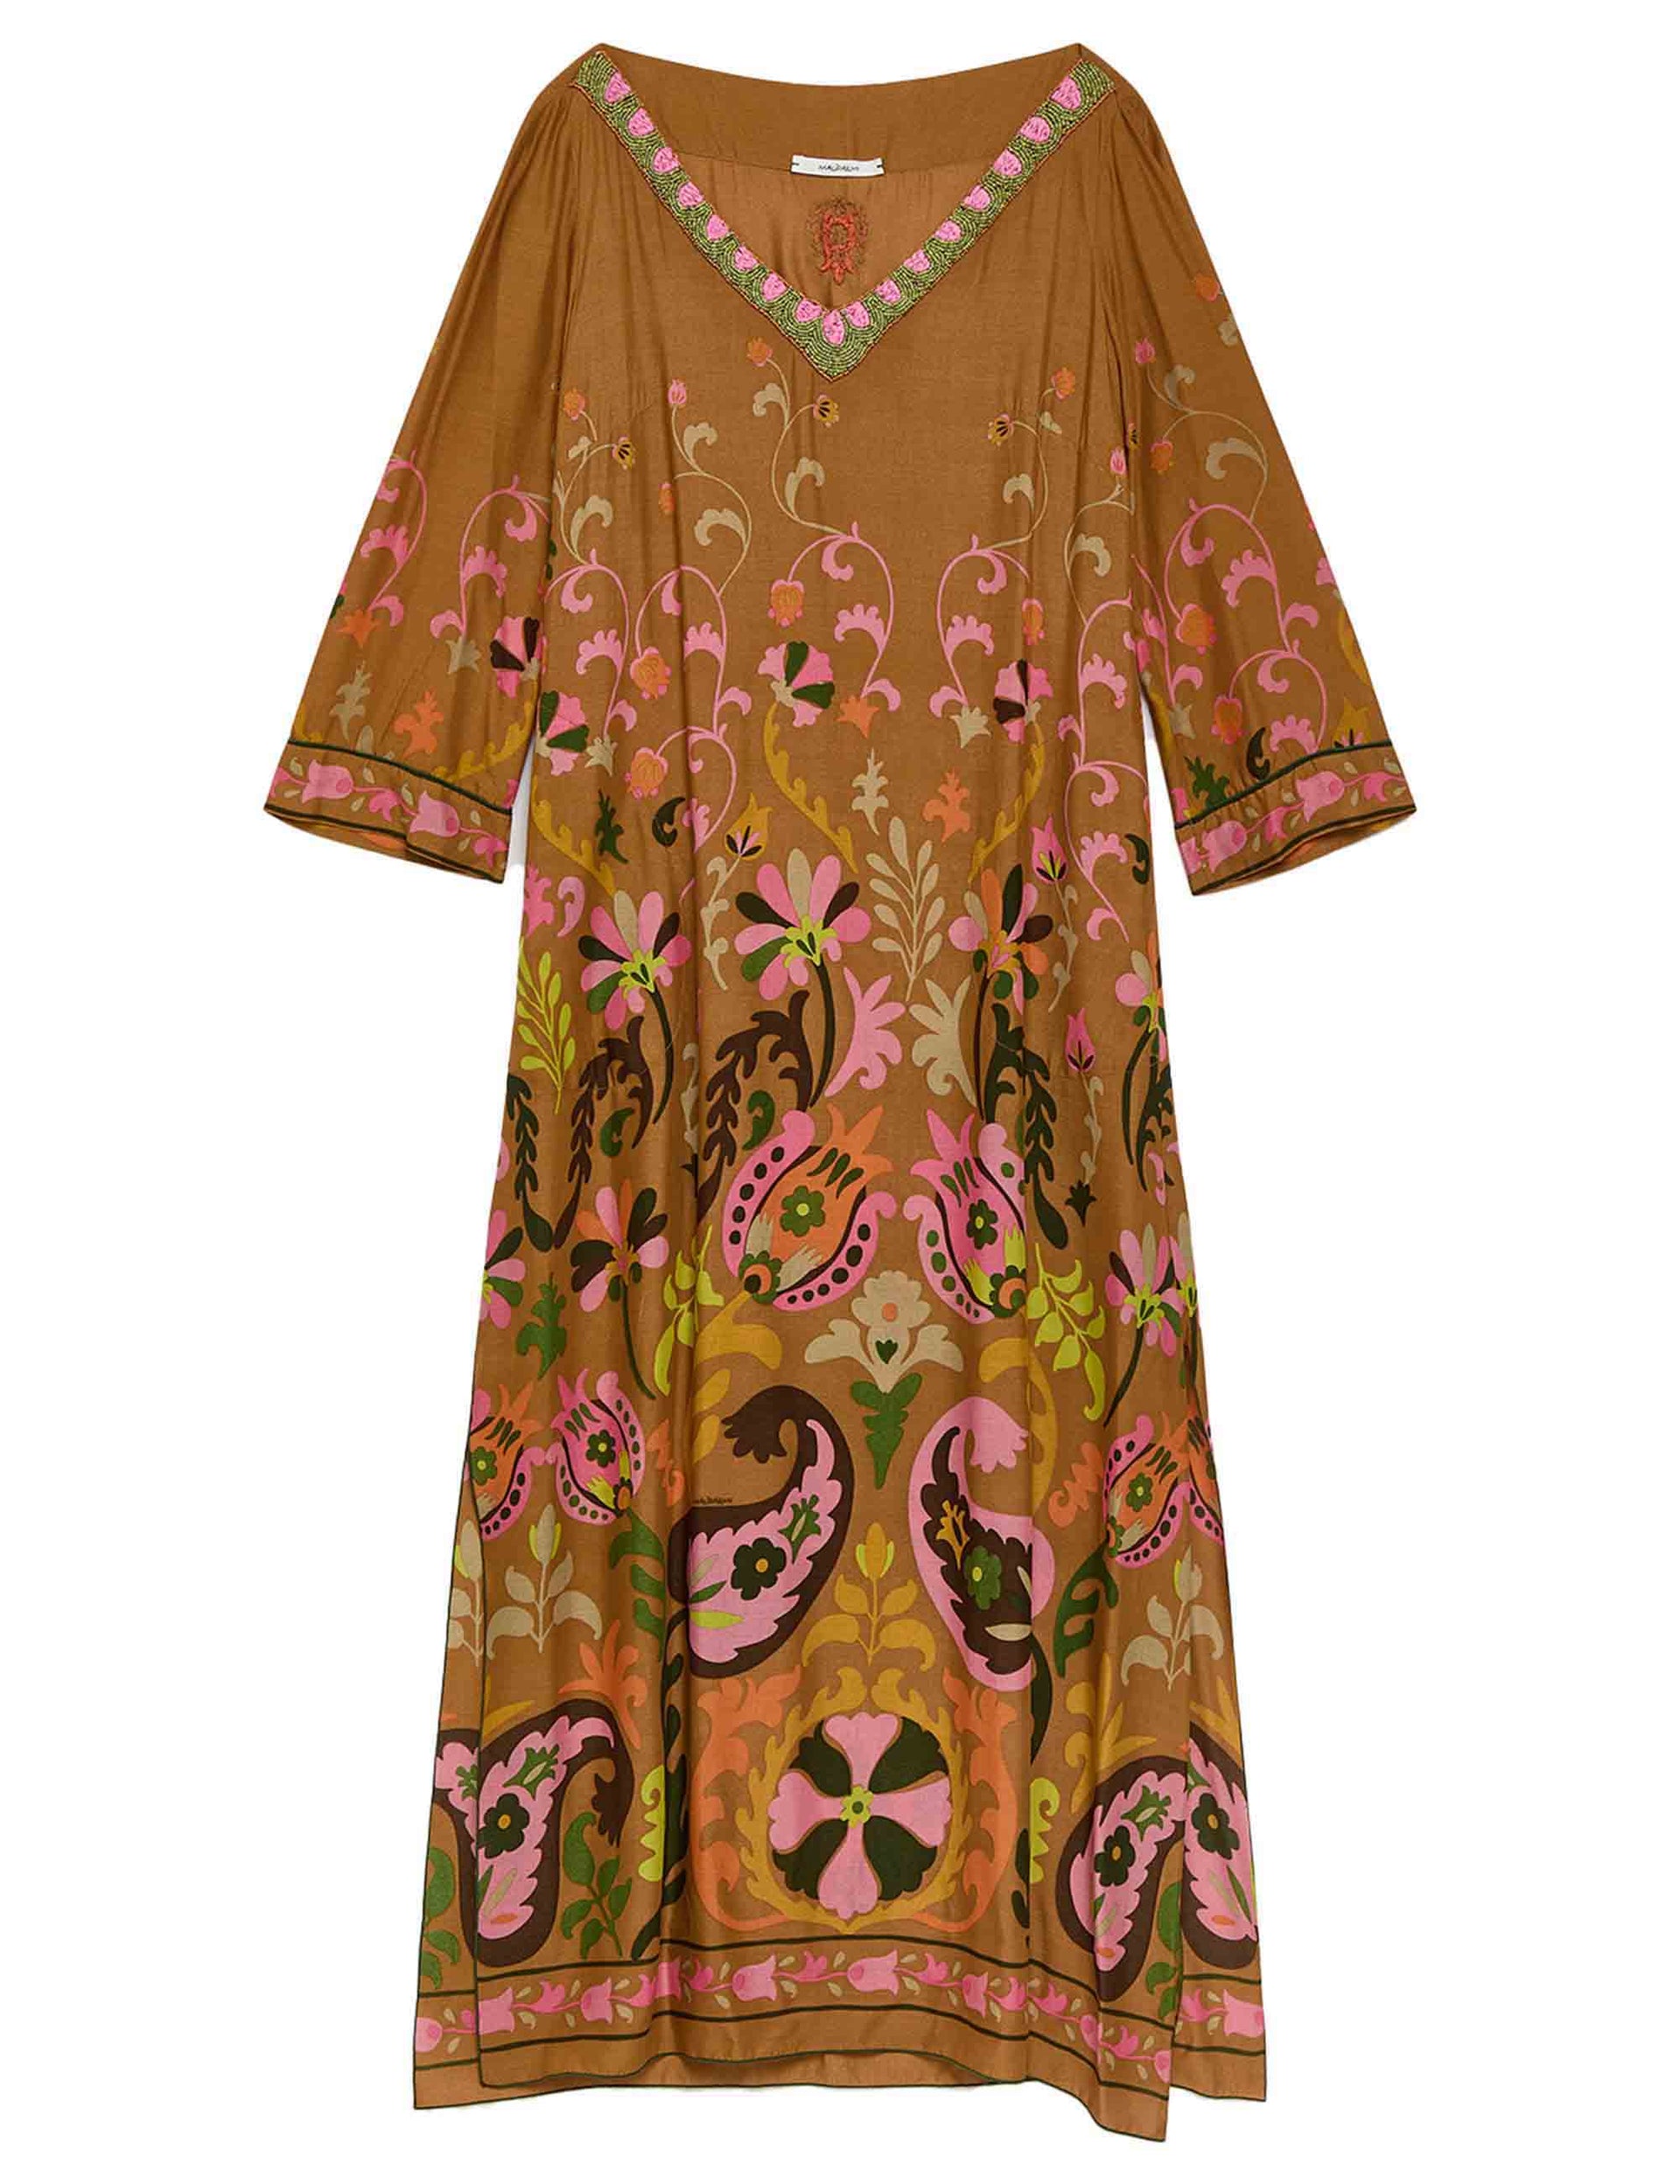 Fortuna Print women's dresses in orange patterned fabric